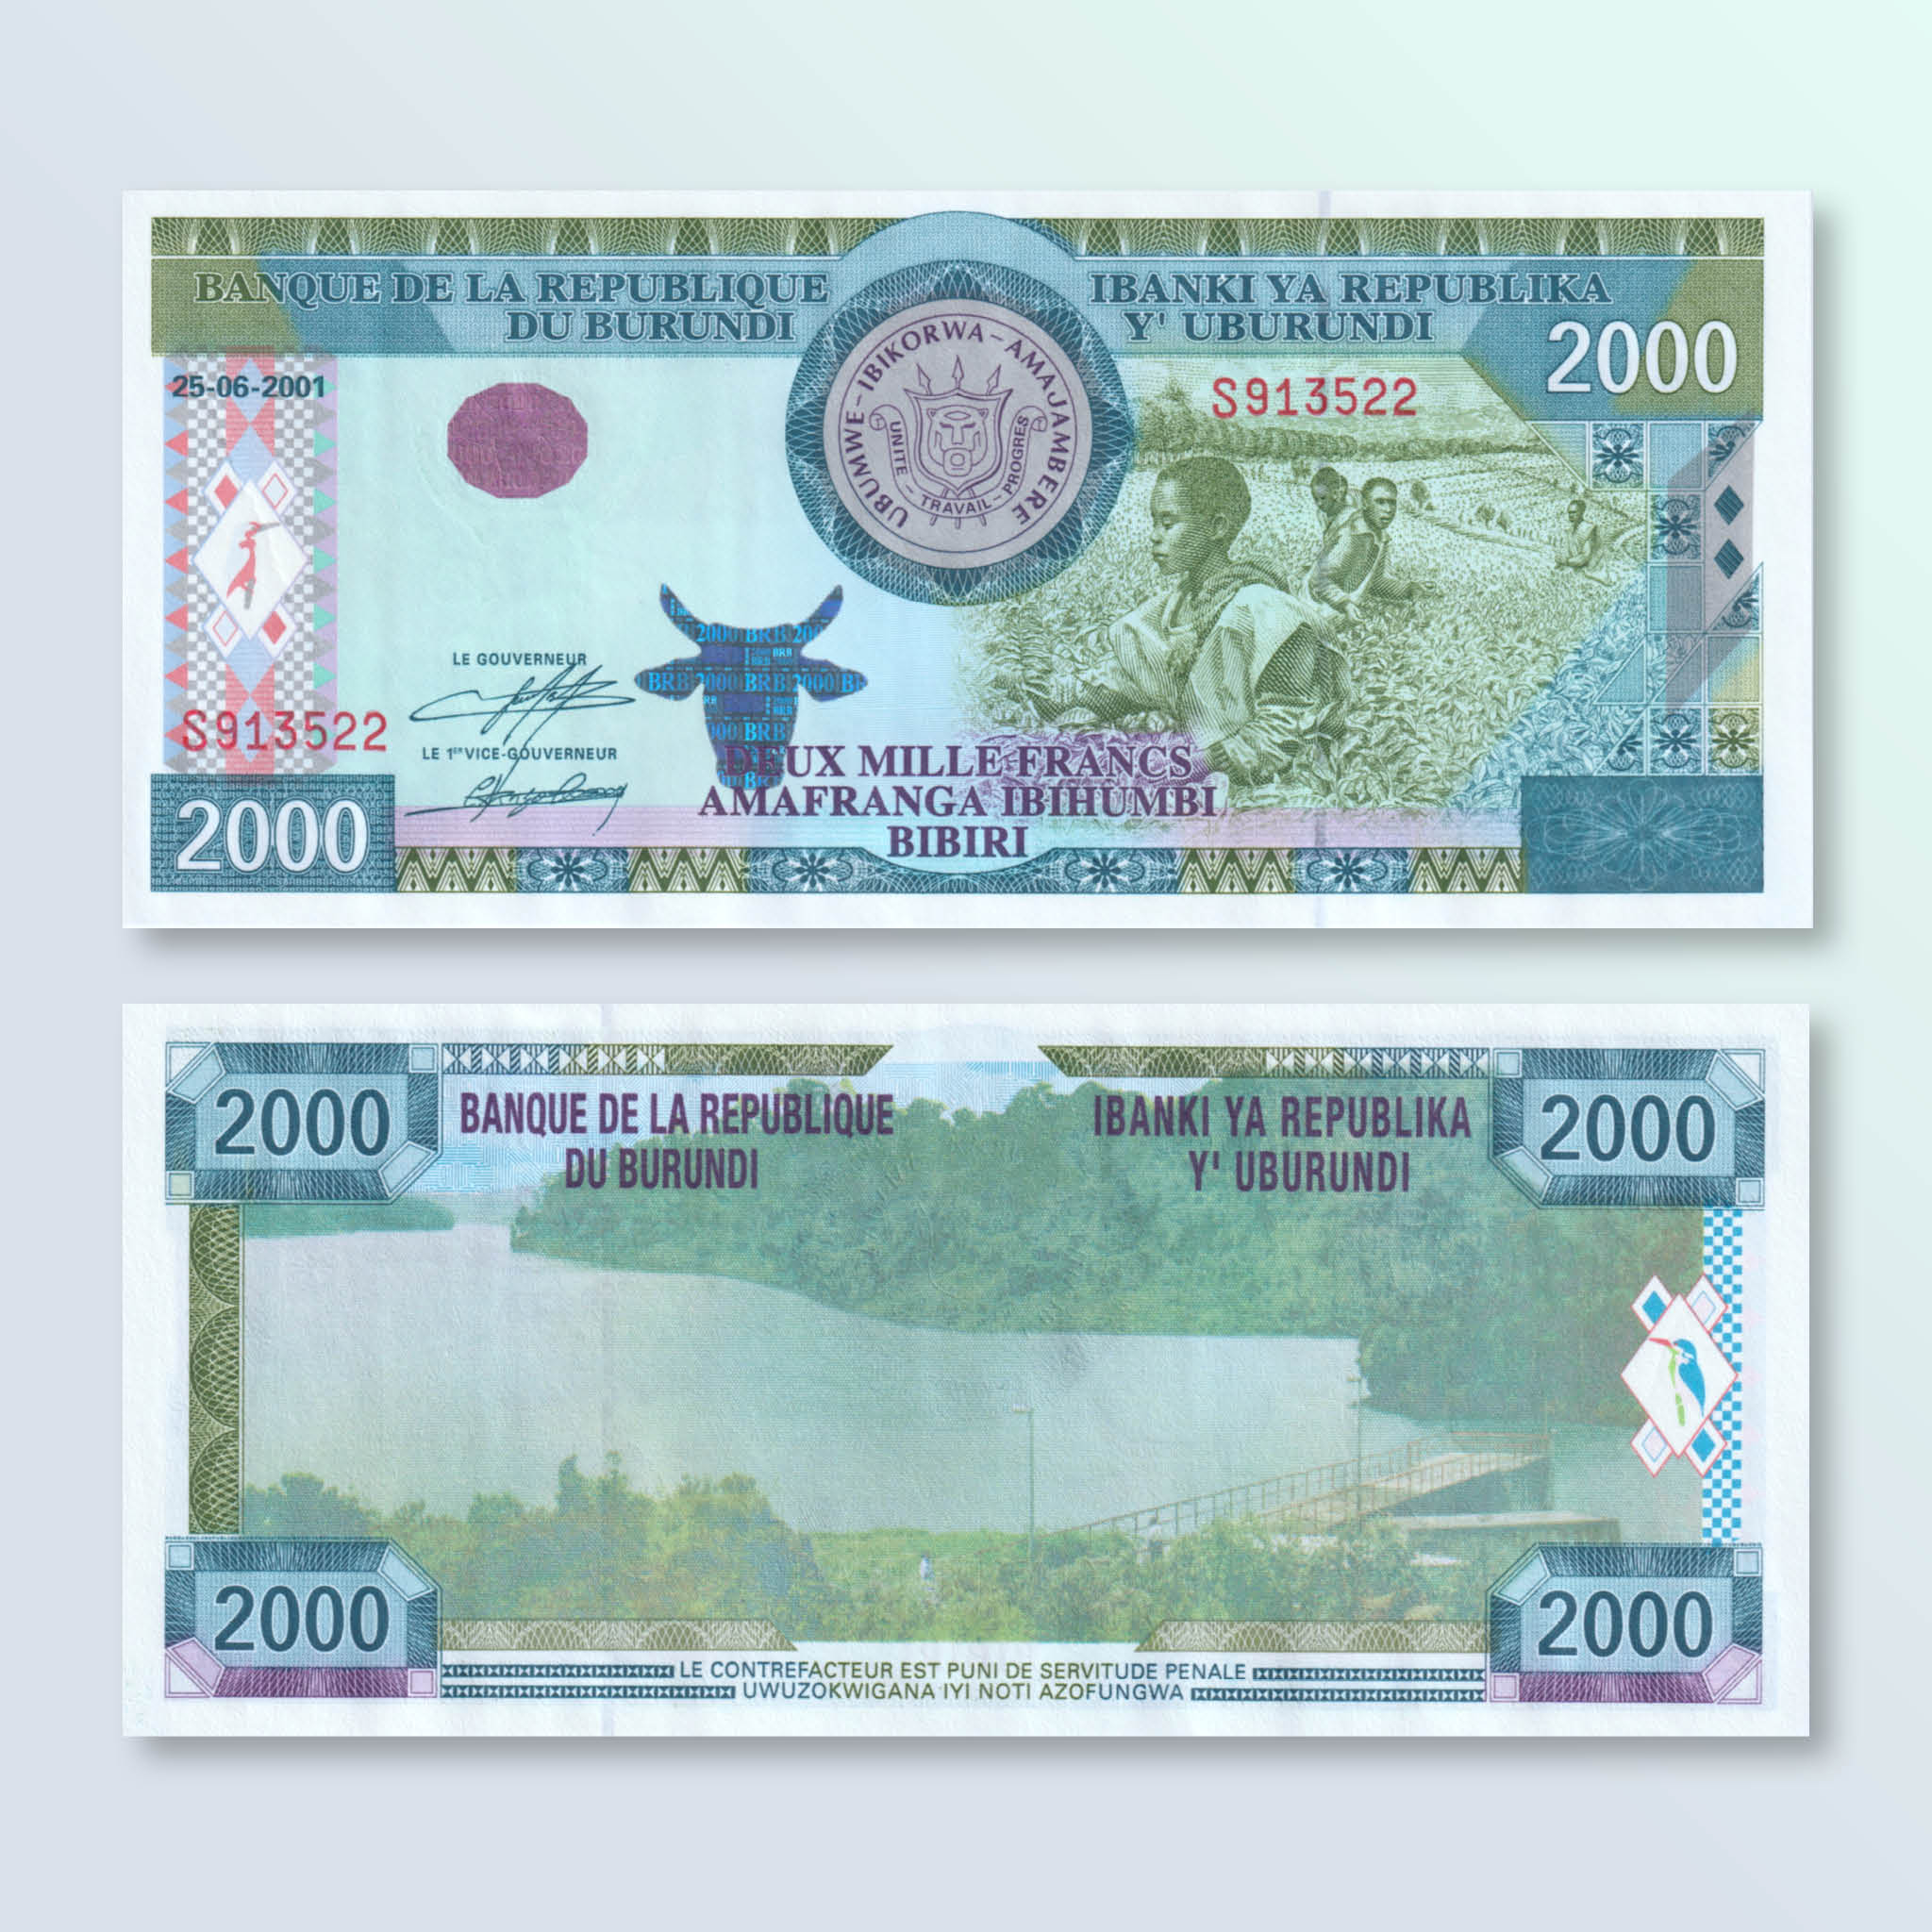 Burundi 2000 Francs, 2001, B228a, P41a, UNC - Robert's World Money - World Banknotes